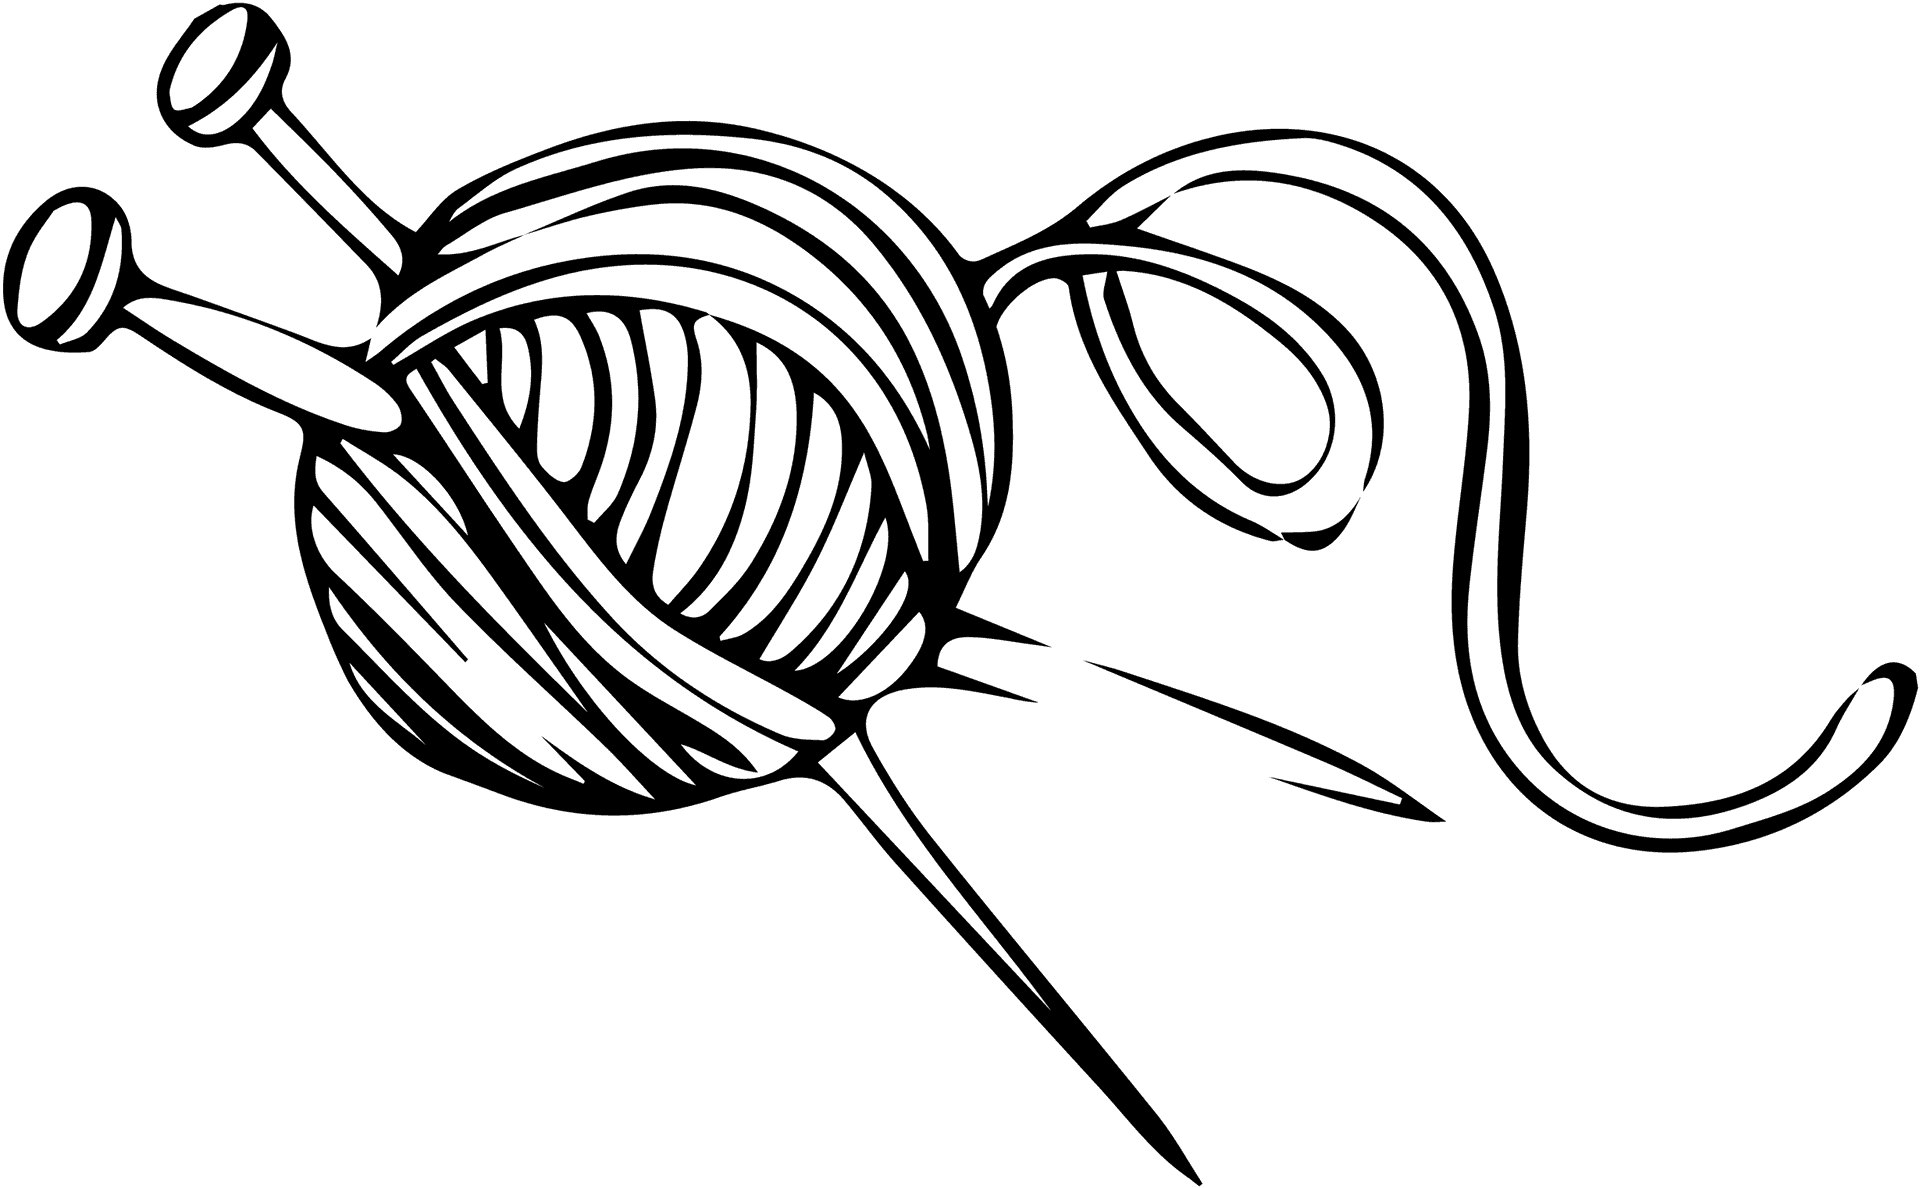 Yarn Balland Knitting Needles Outline PNG